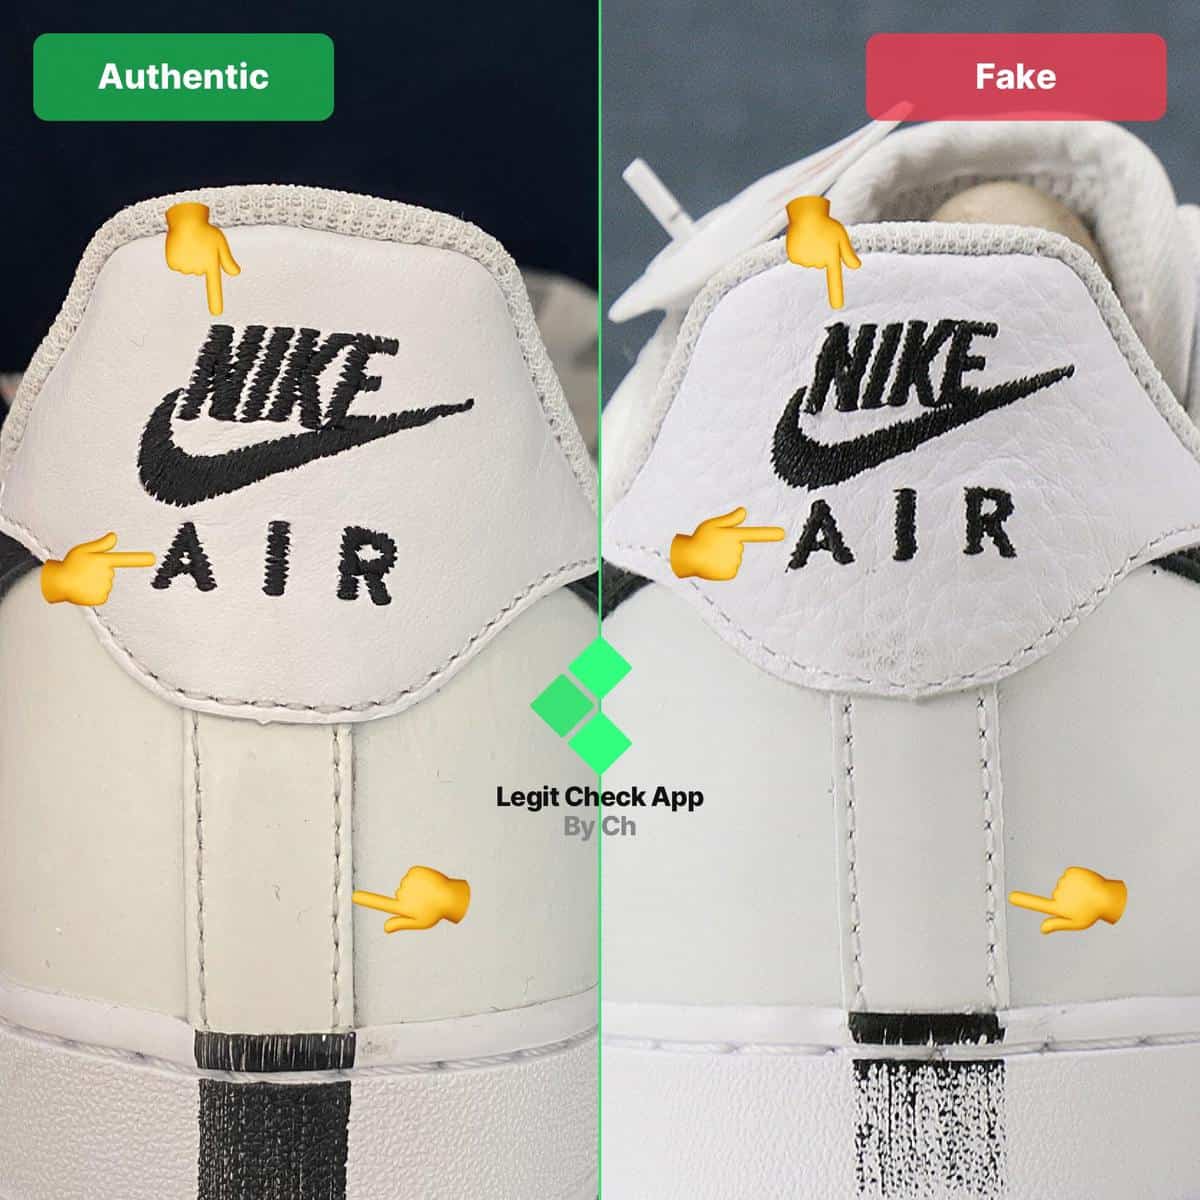 Nike Air Barrage real vs fake. How to spot original Nike air